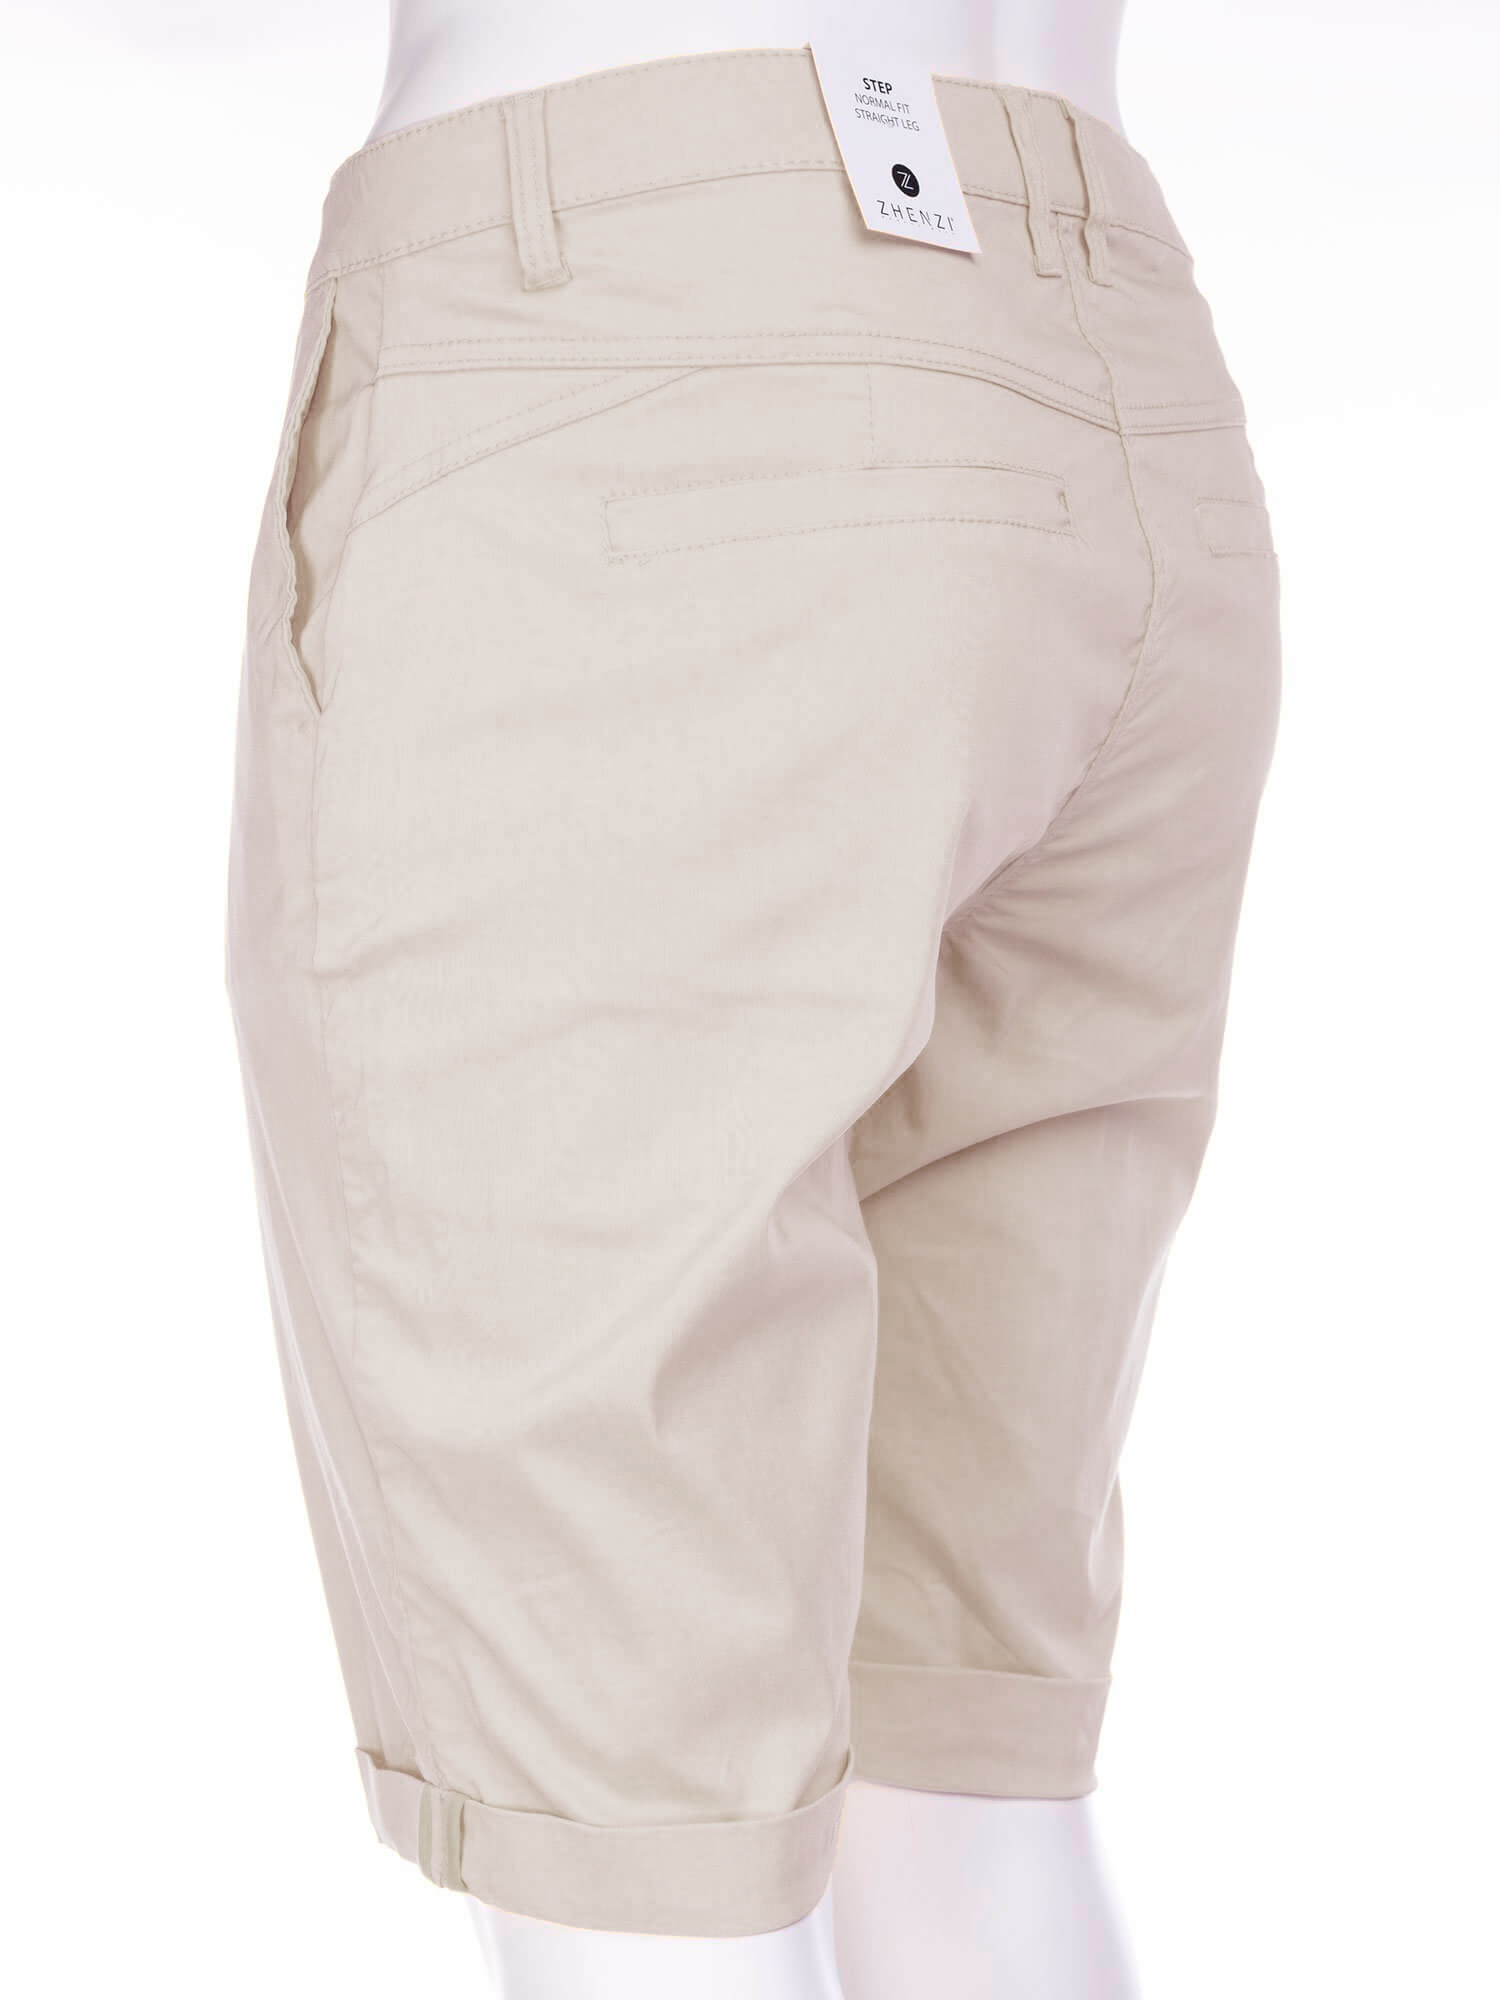 STEP - Sand farvede shorts i bengalin kvalitet fra Zhenzi